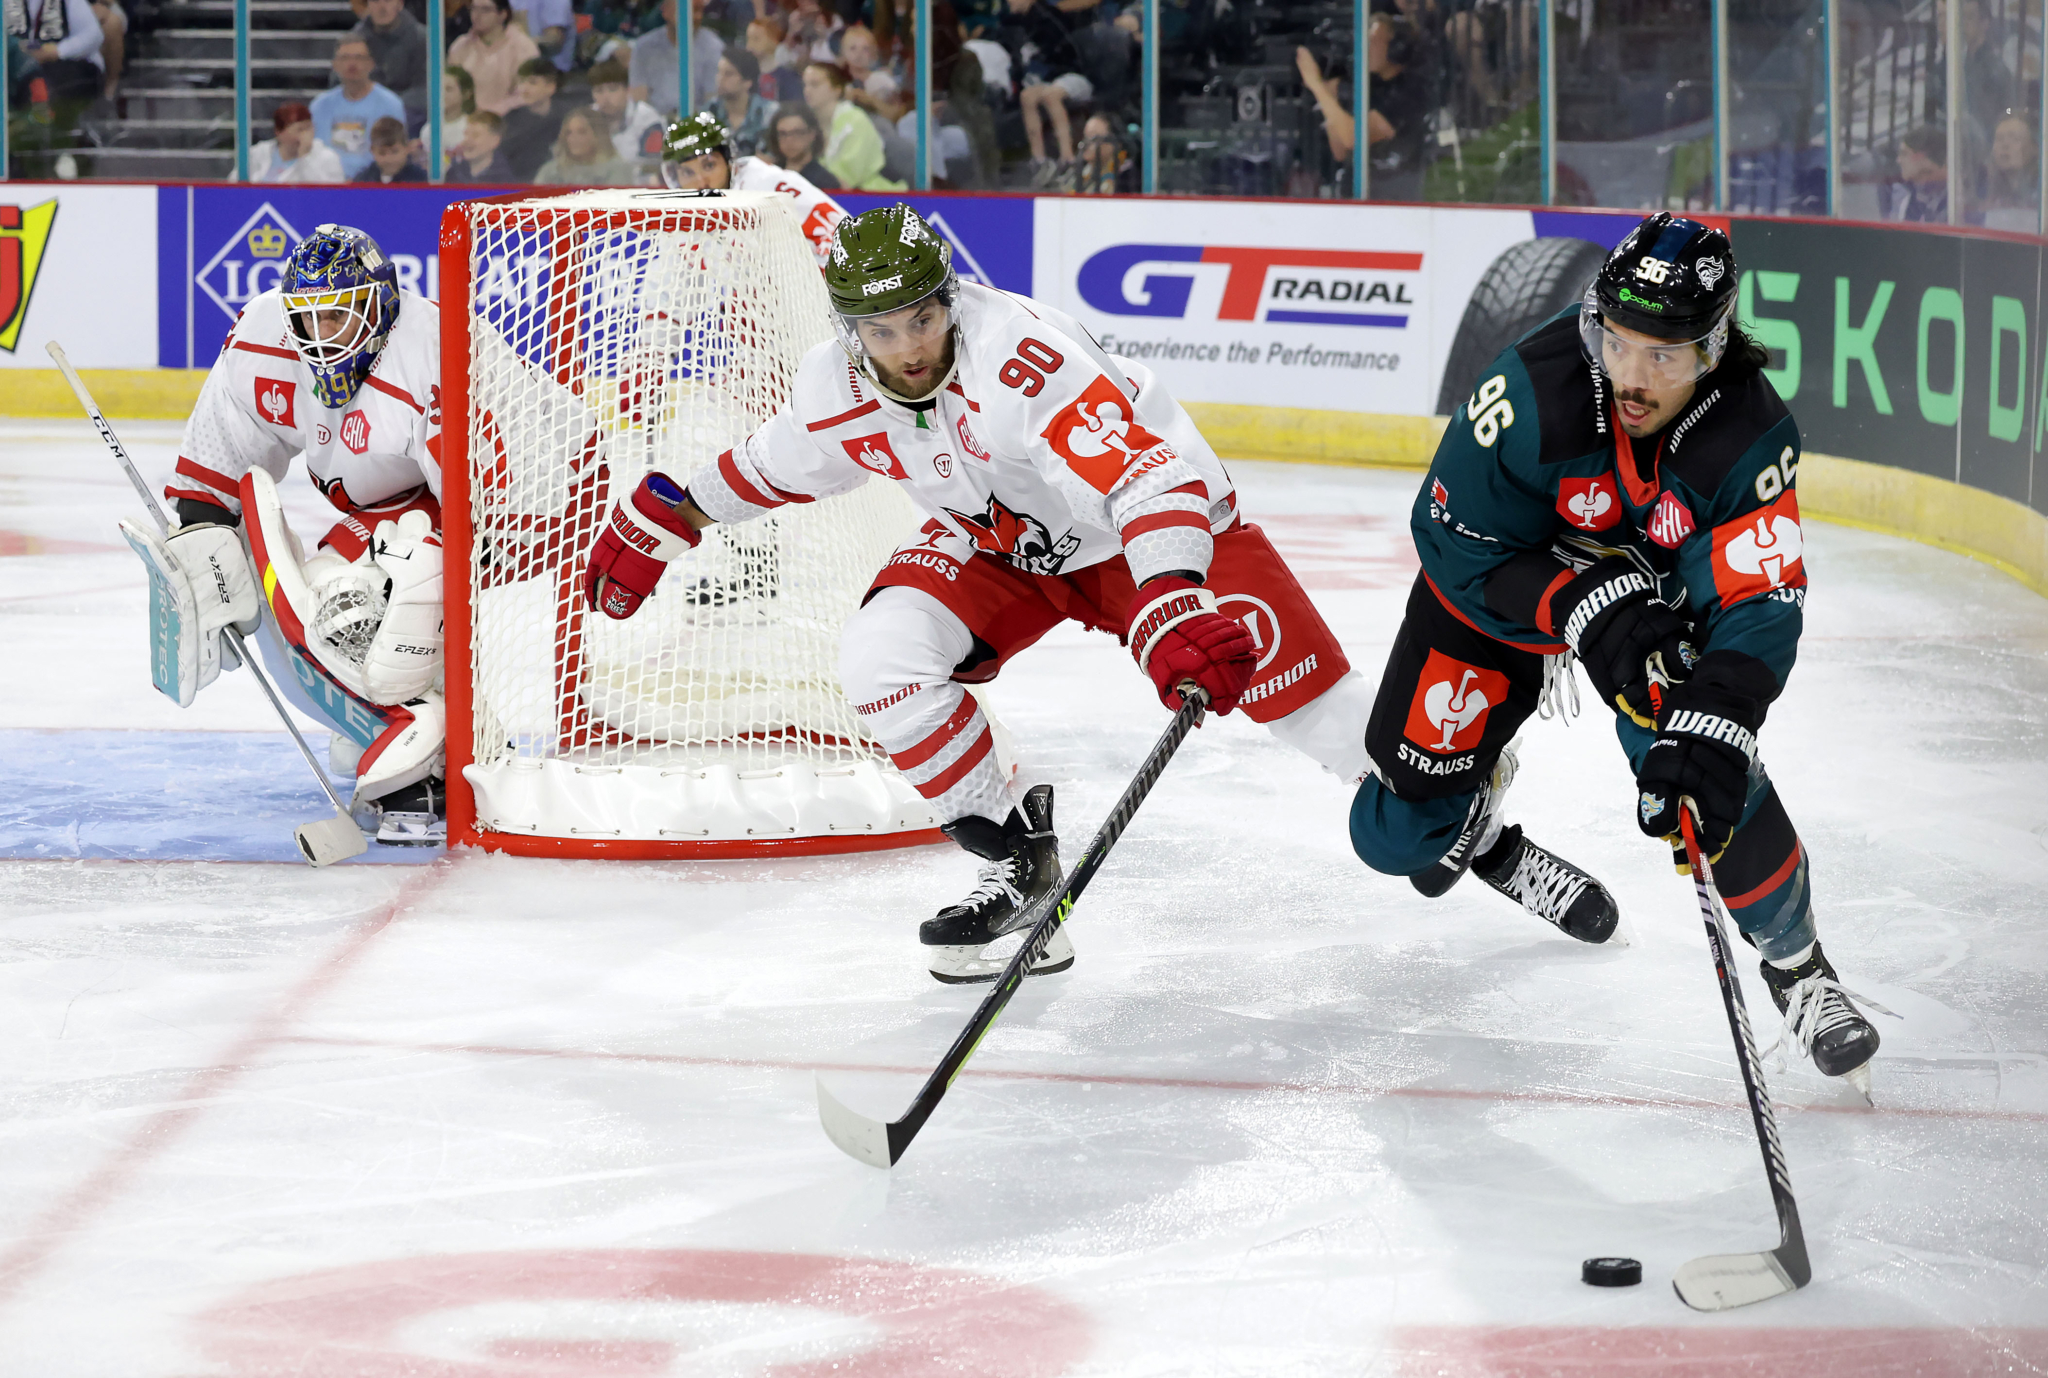 Giti Tire signs European ice hockey partnerships